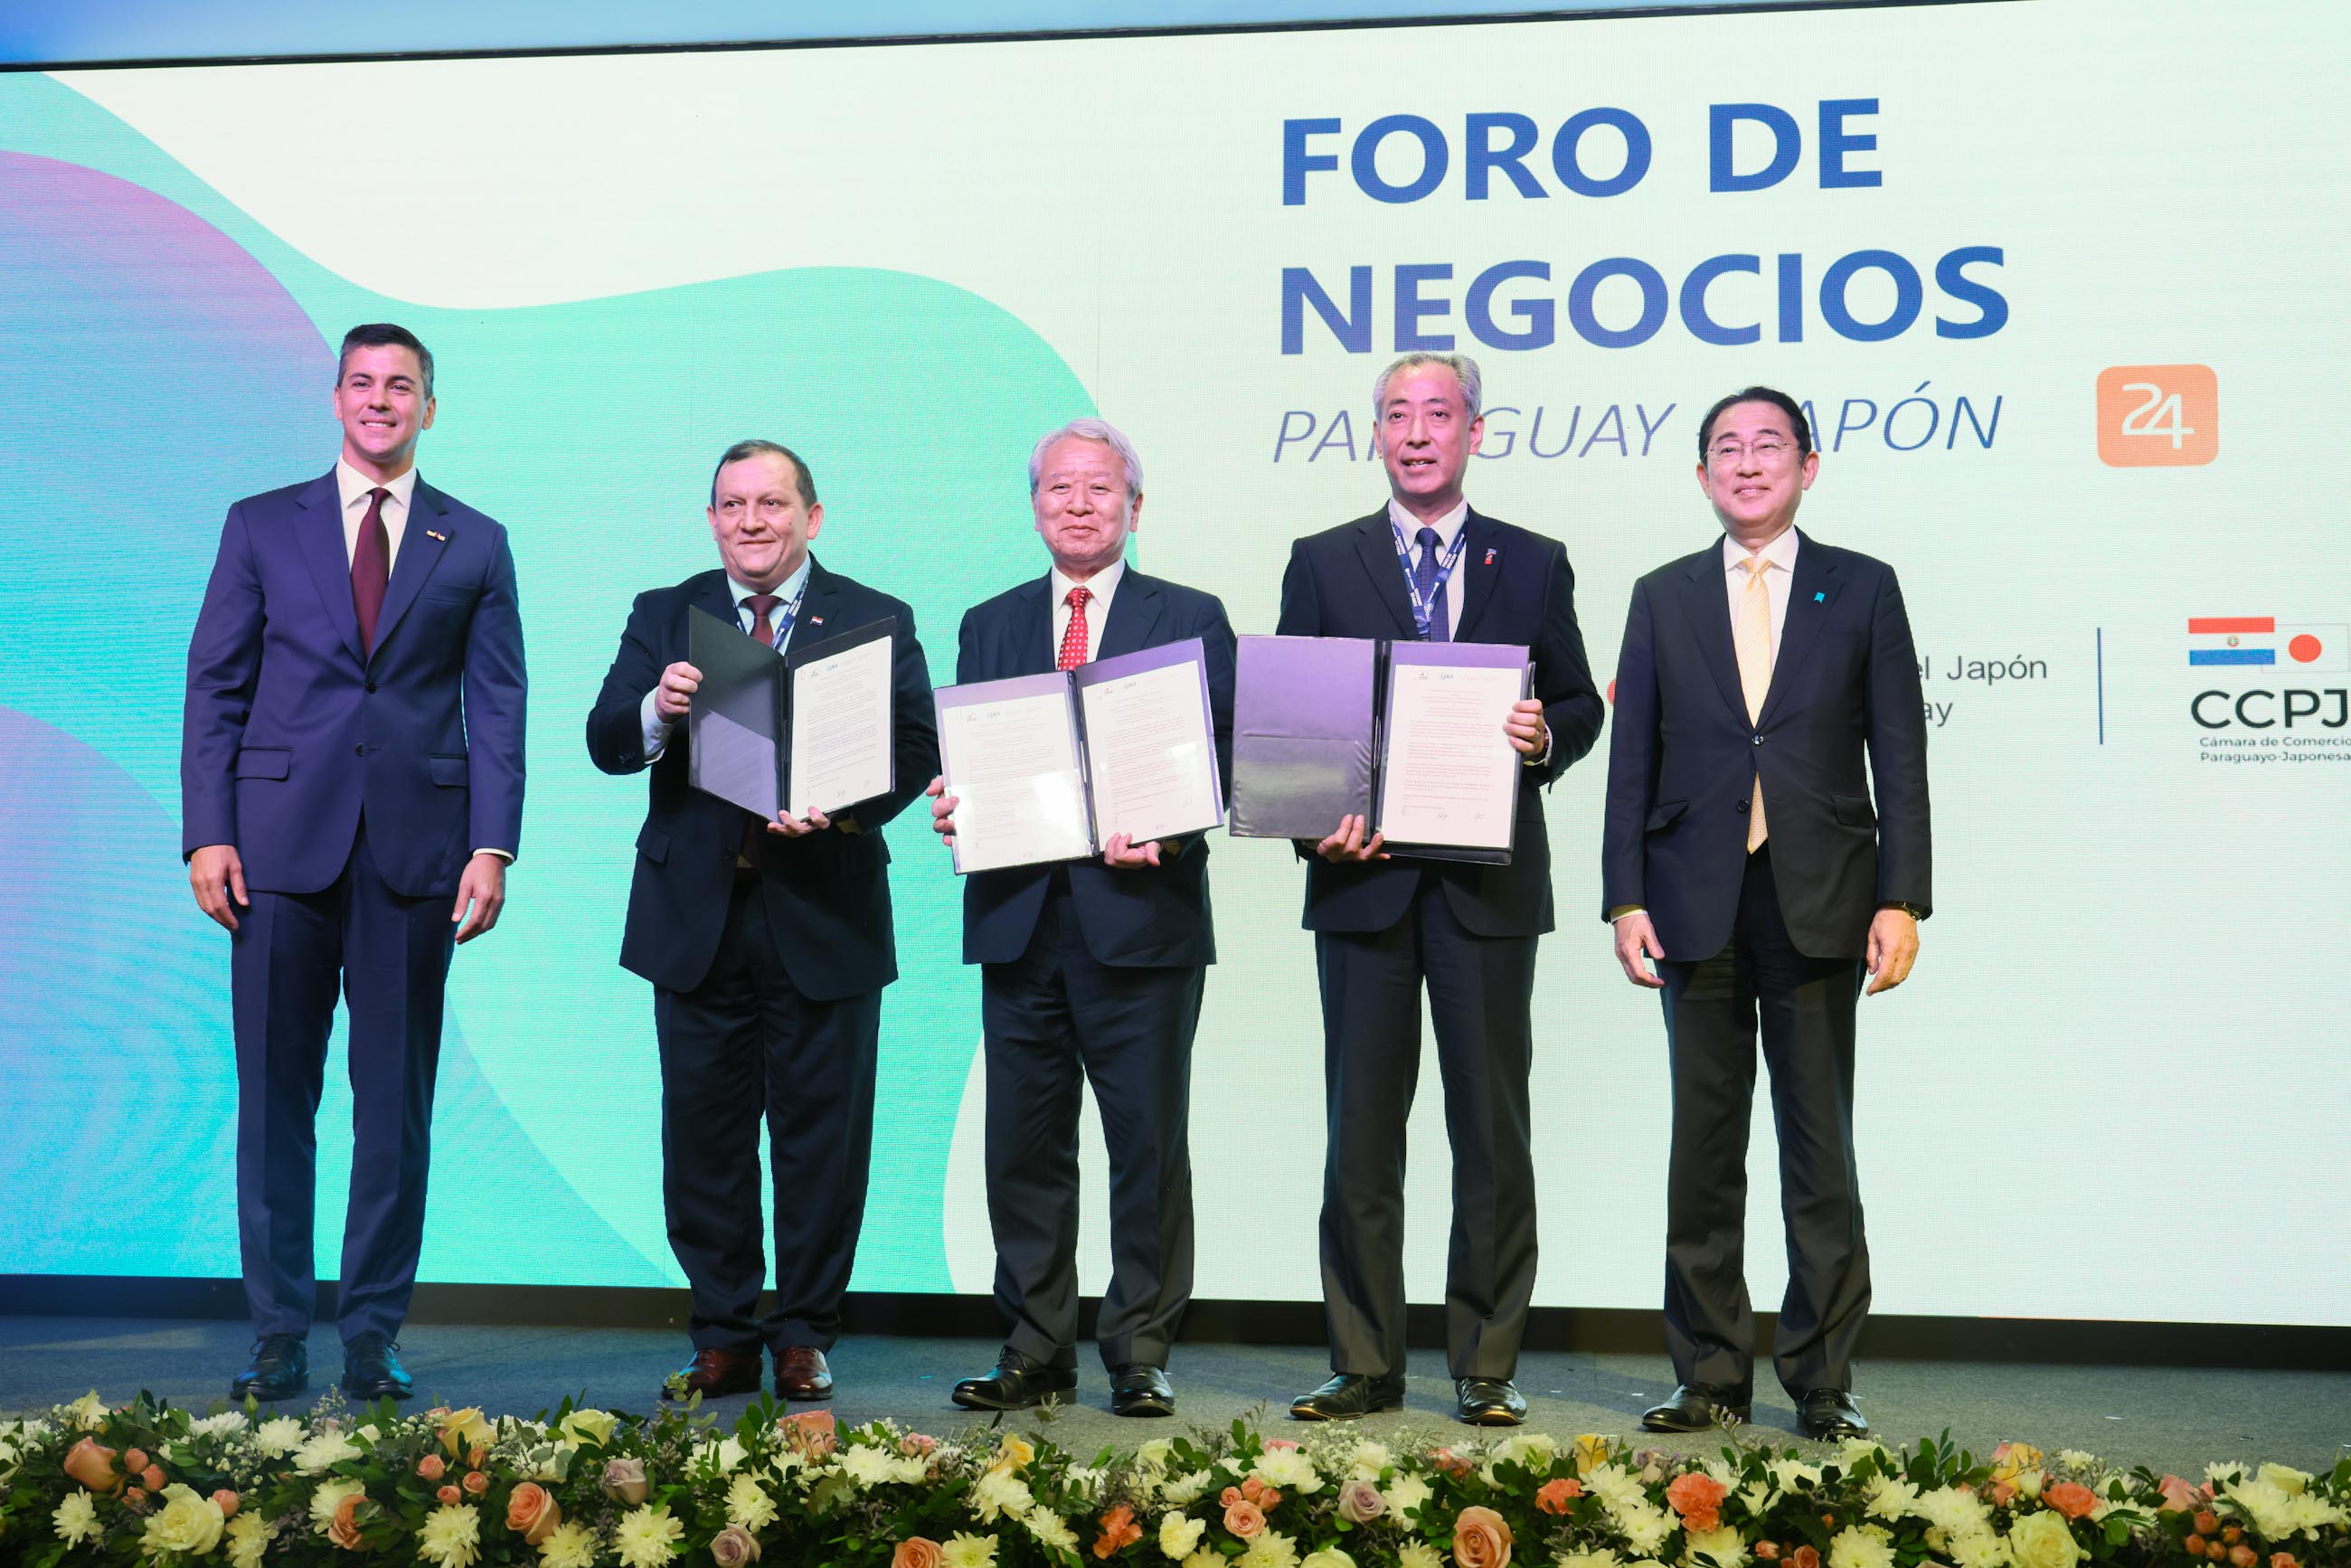 Japan-Paraguay Business Forum and memorandum announcement ceremony (5)